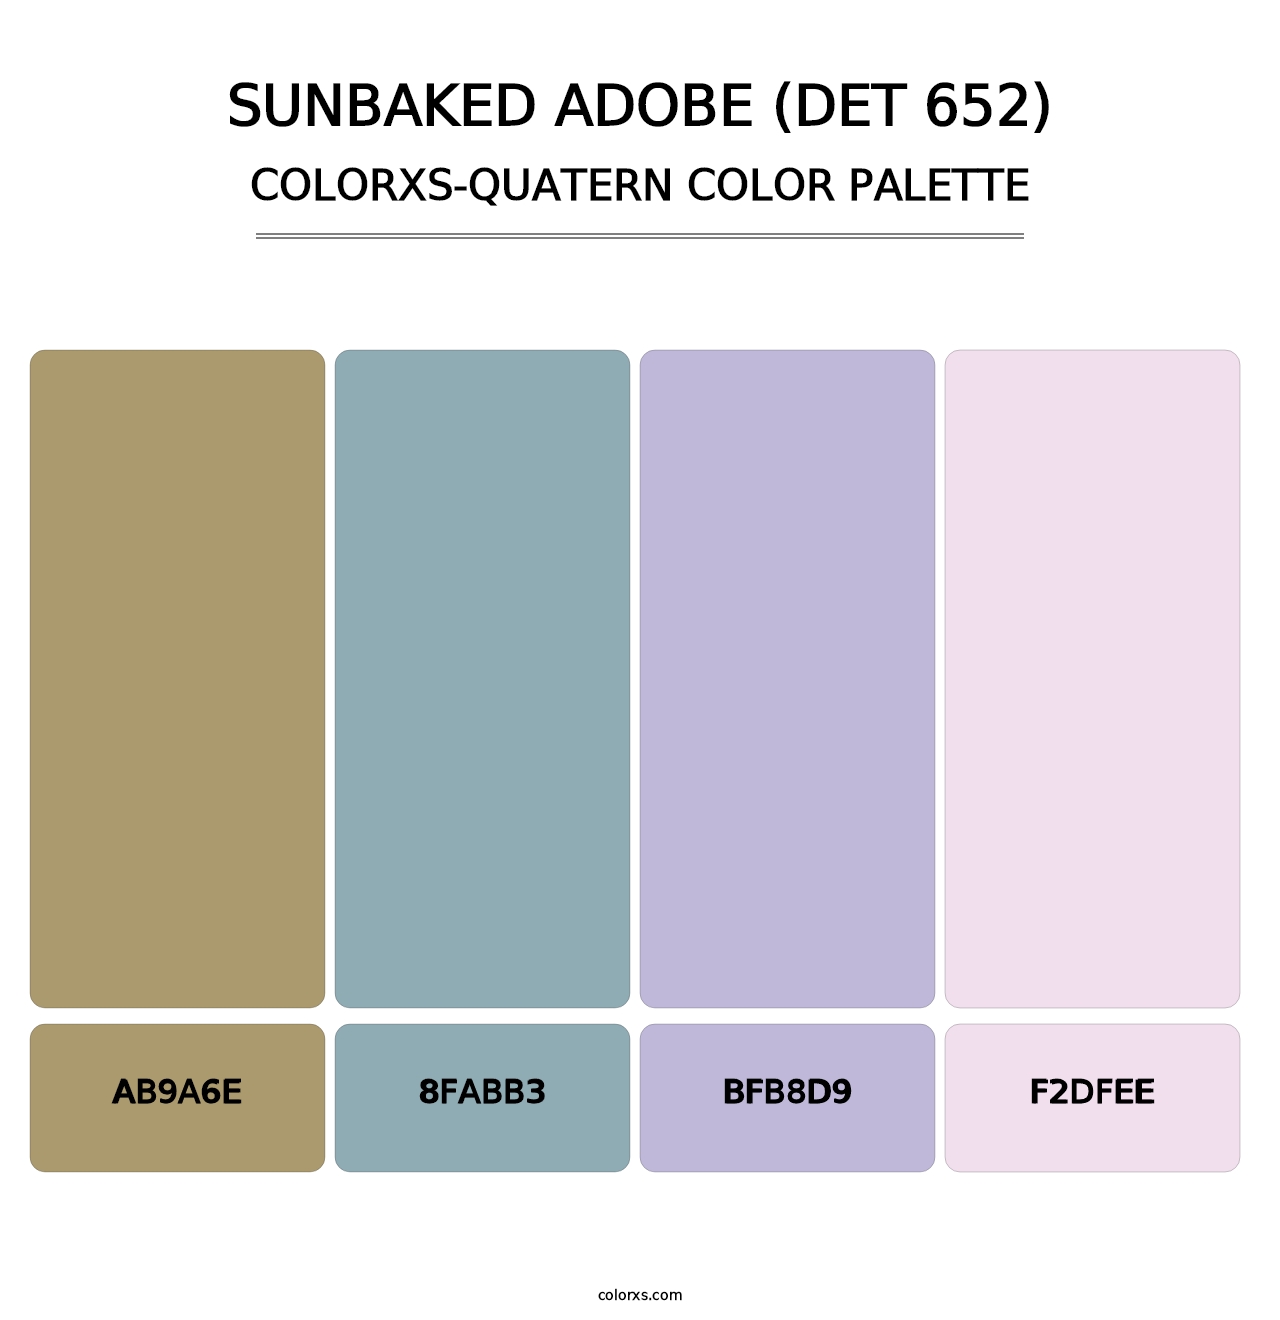 Sunbaked Adobe (DET 652) - Colorxs Quatern Palette